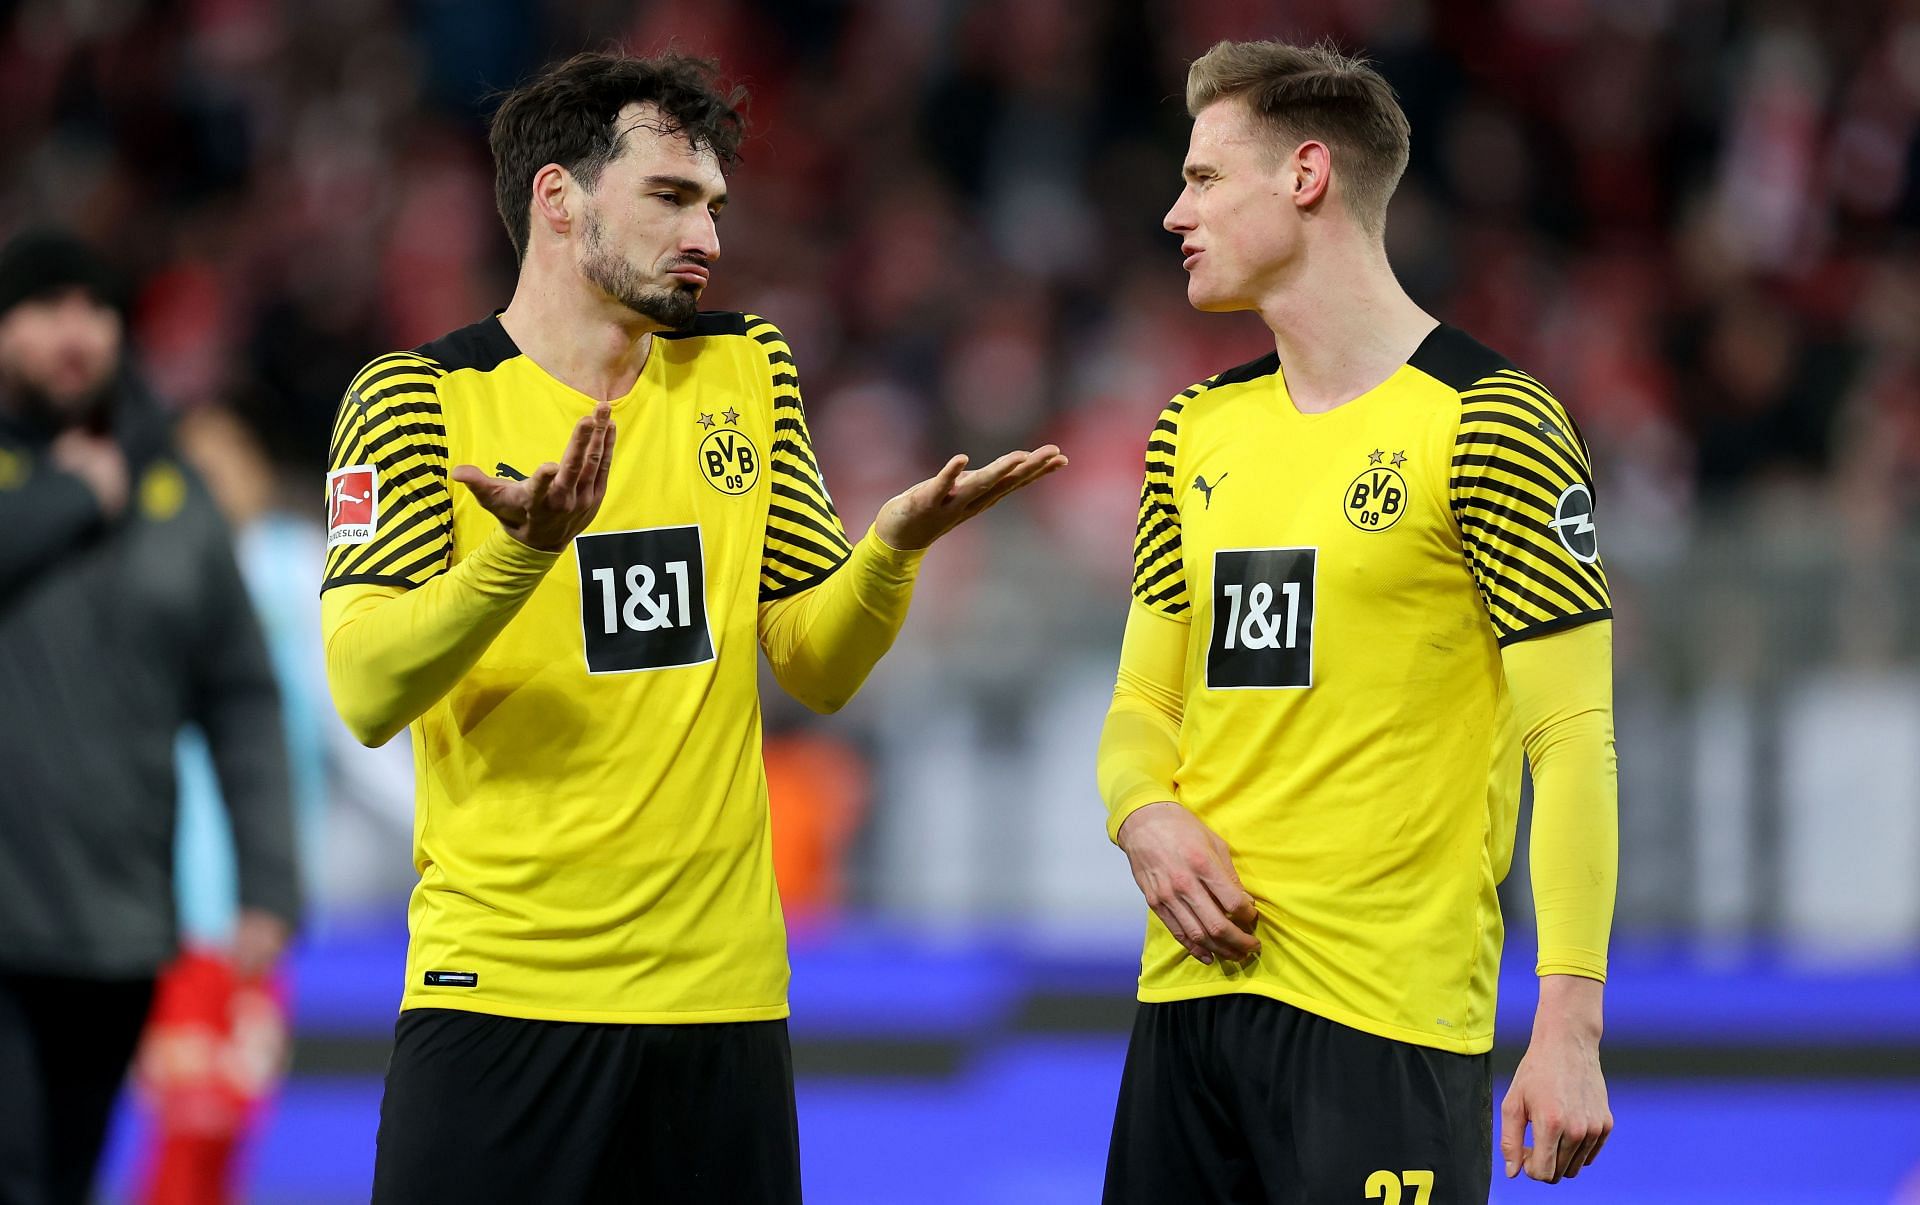 Borussia Dortmund and Rangers go head to head on Thursday